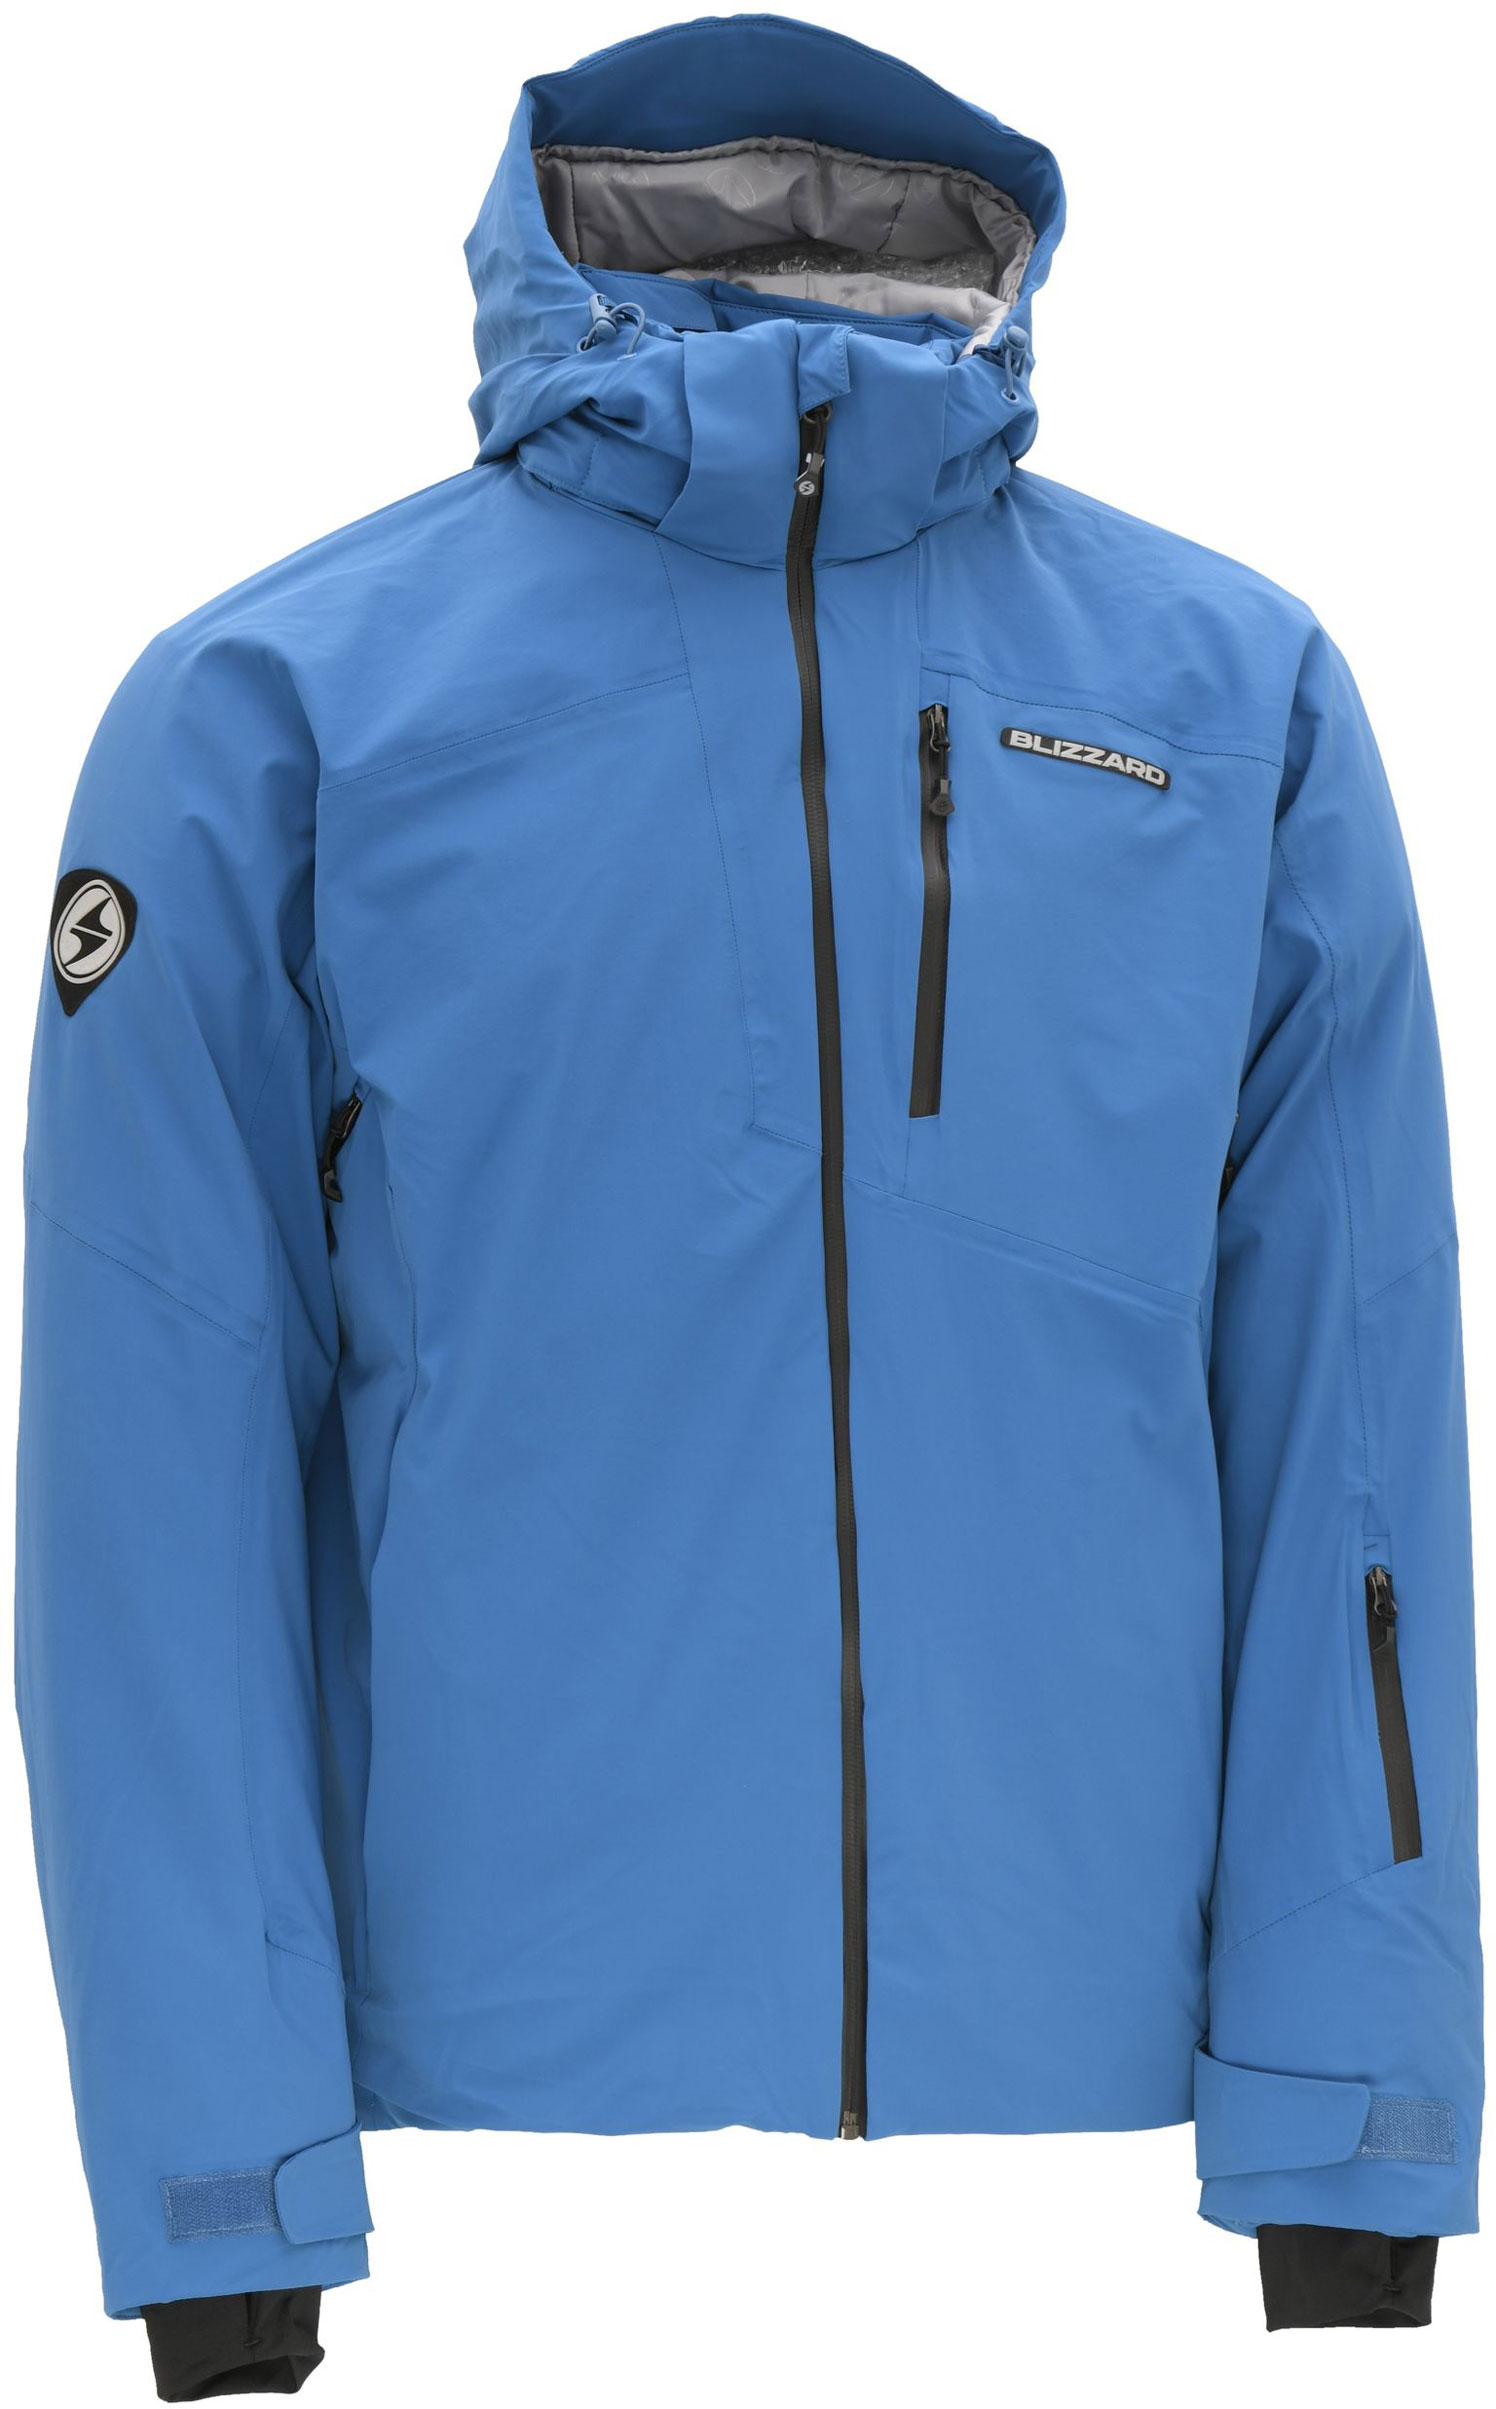 Куртка горнолыжная Blizzard Ski Jacket Silvretta Petroleum, размер L - фото 1